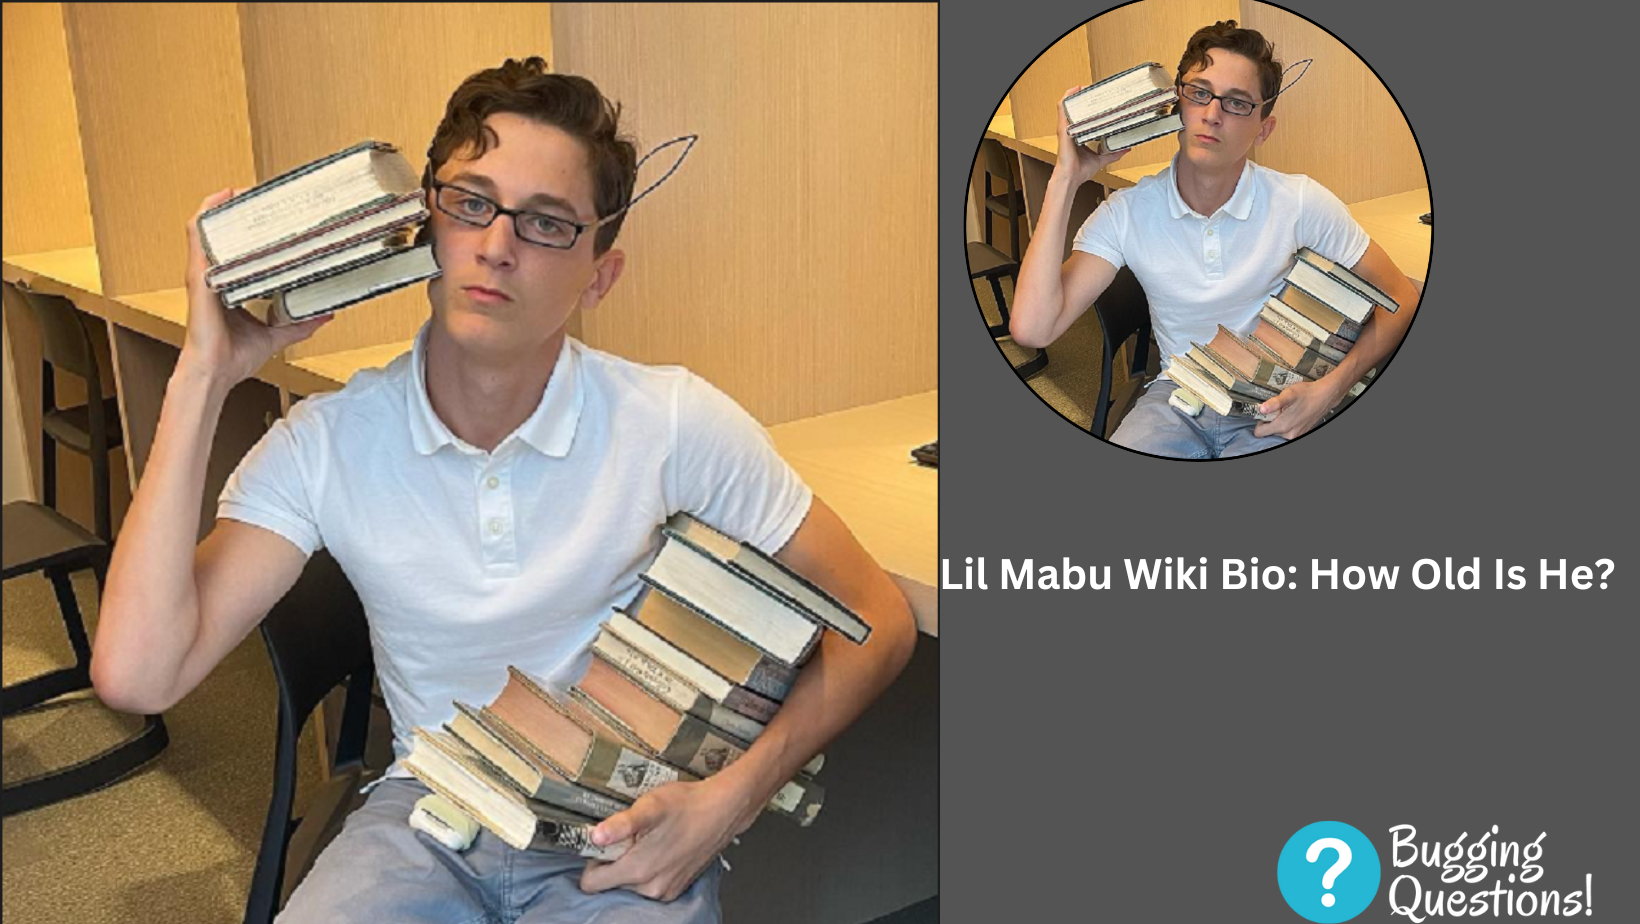 Lil Mabu Wiki Bio: How Old Is He?